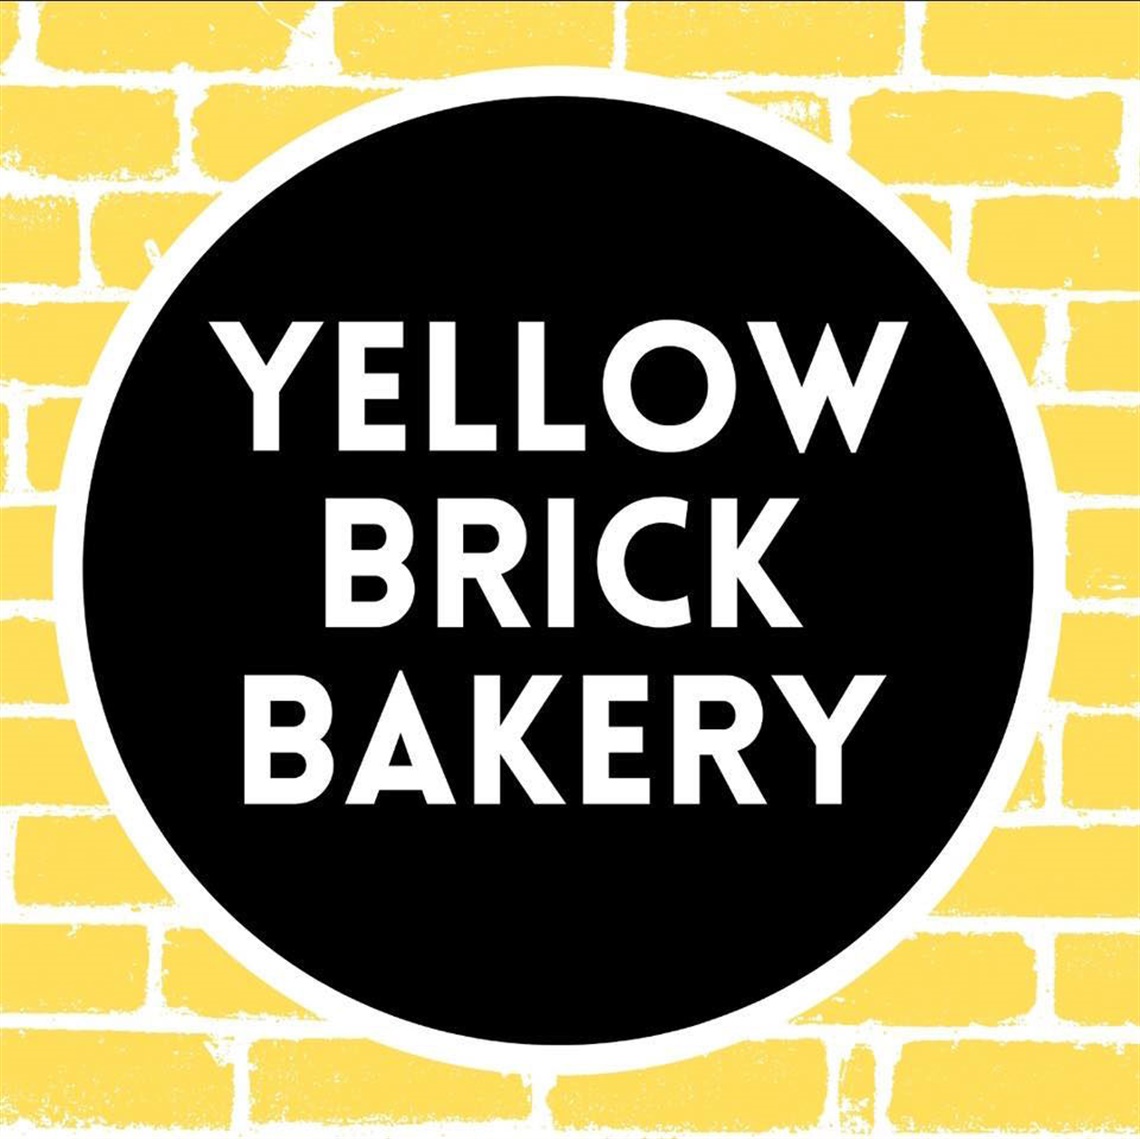 Yellow Brick Bakery logo in black circle against yellow brick pattern background